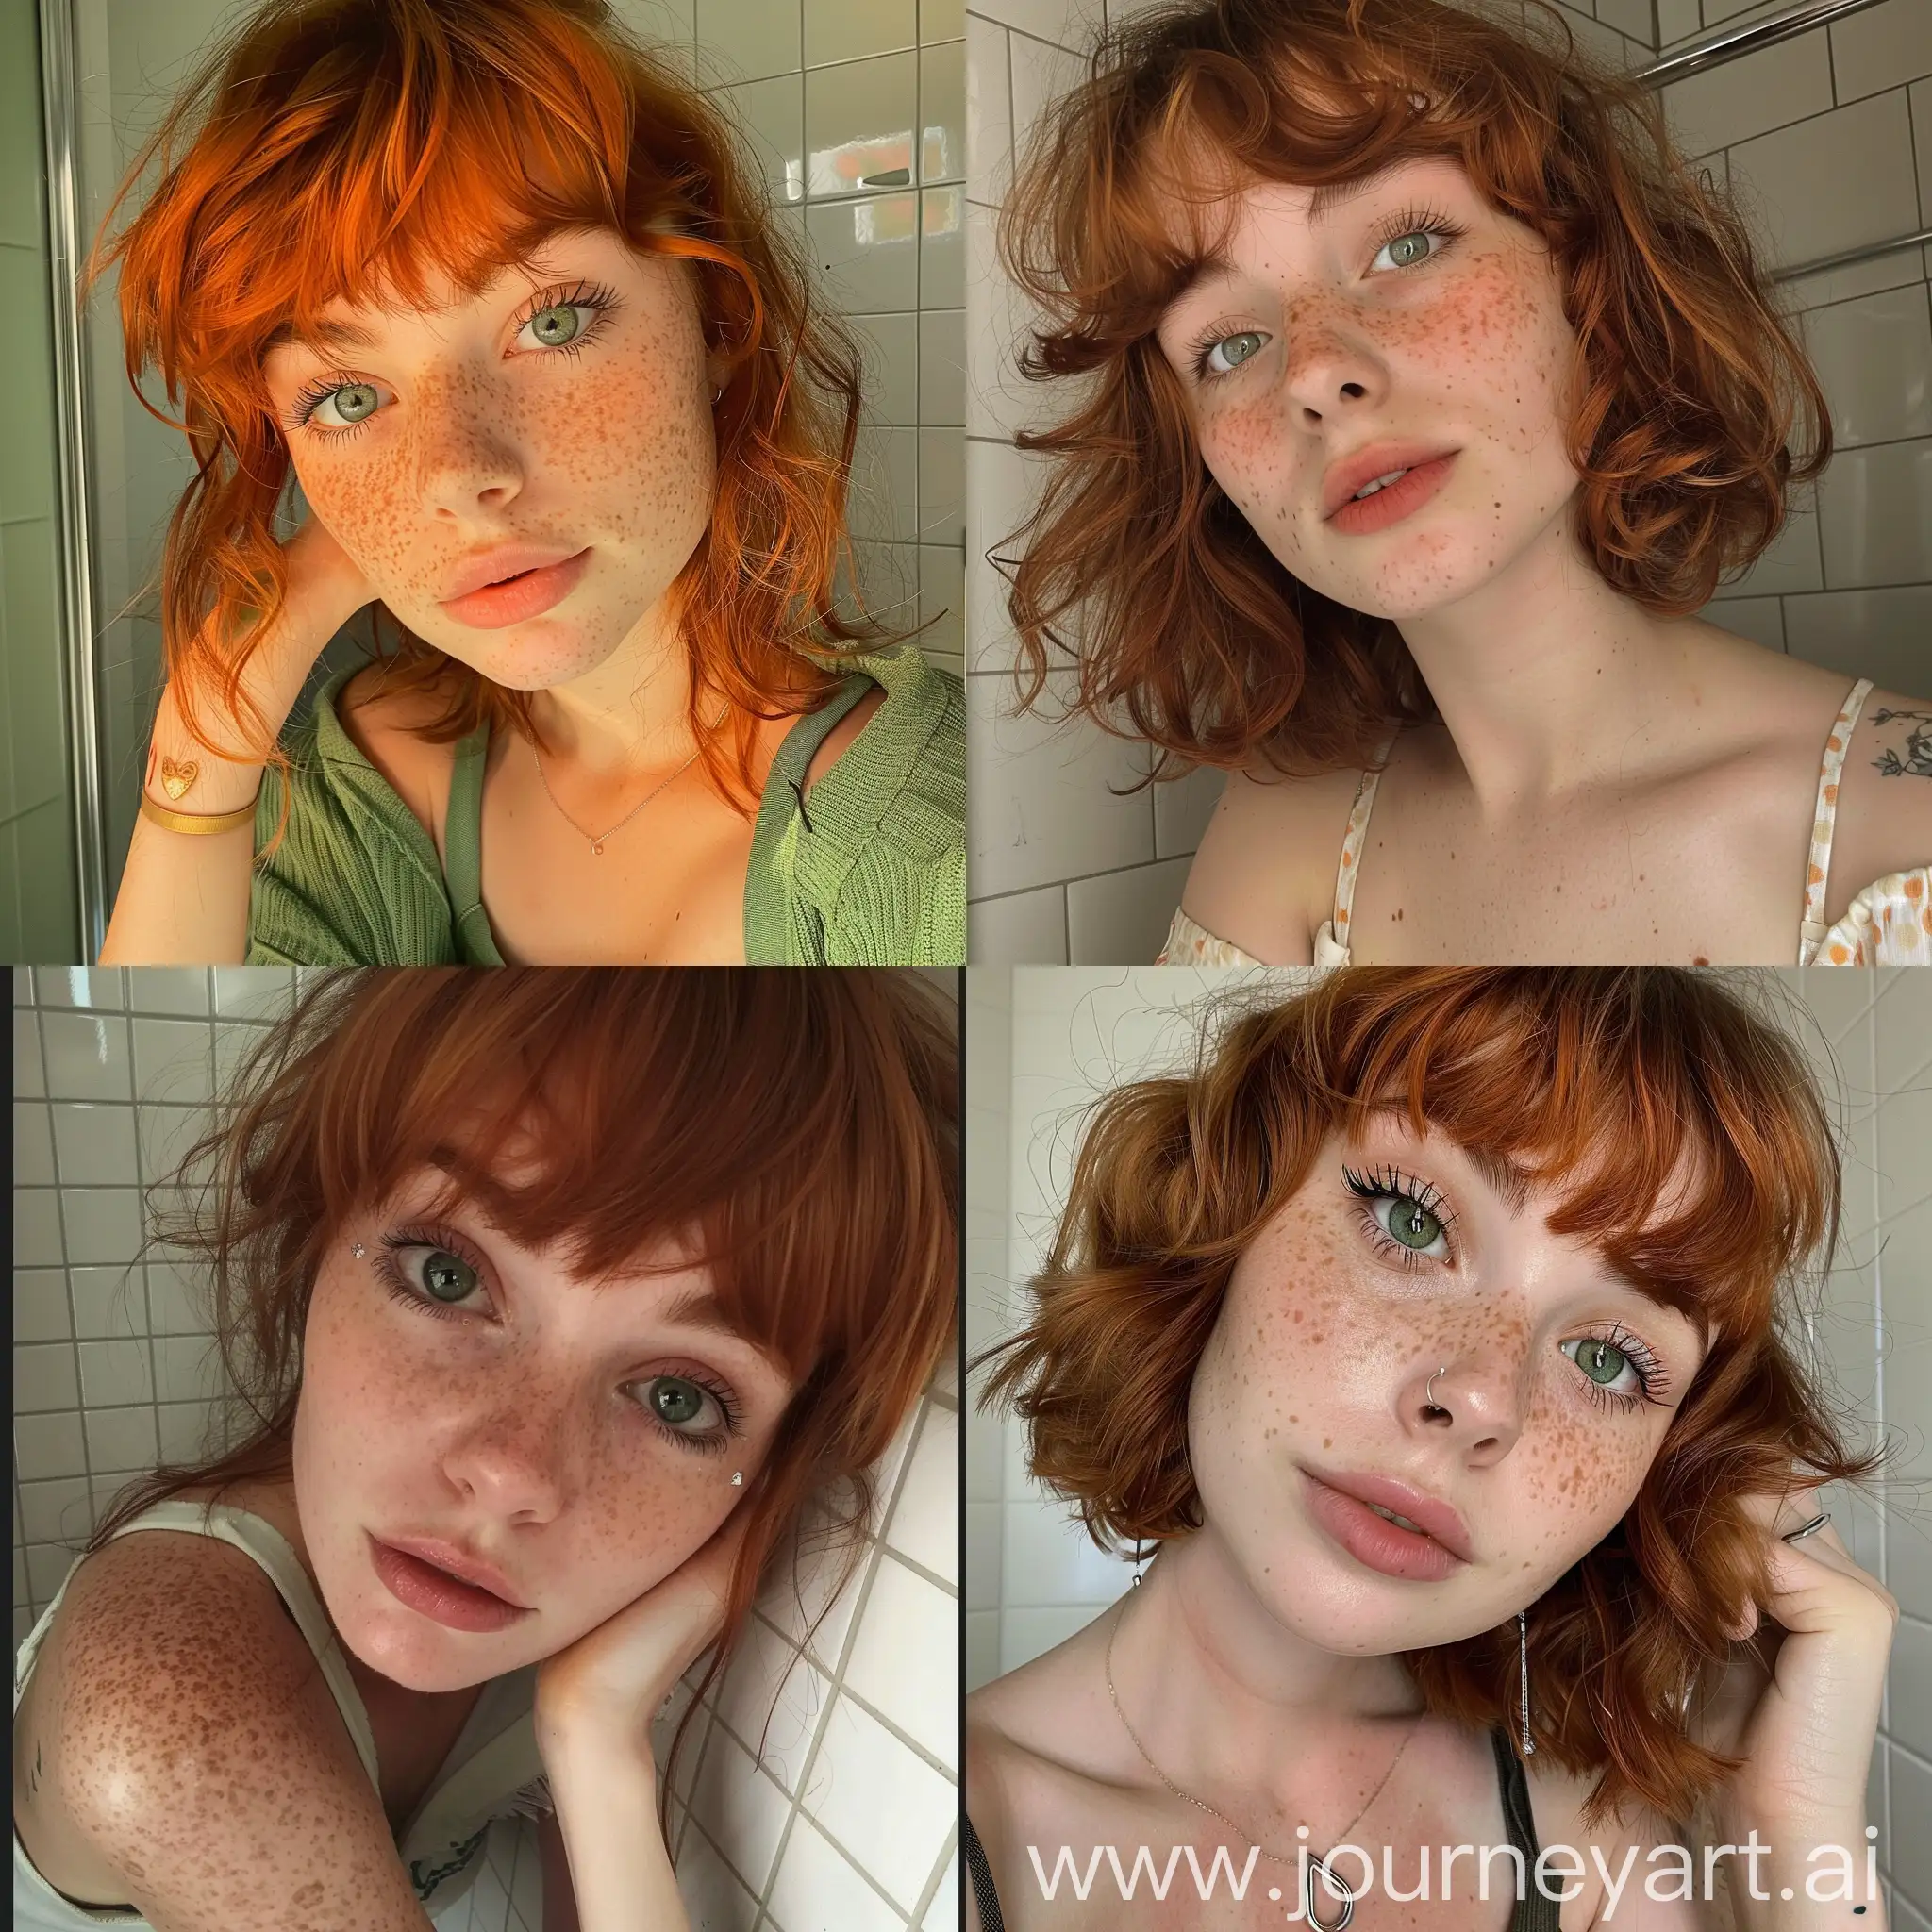 Aesthetic instagram selfie of a 15 year old girl, lavatory, adorable, cute, happy, close up selfie, freckles, red hair, green eyes, bangs, short hair, full hair